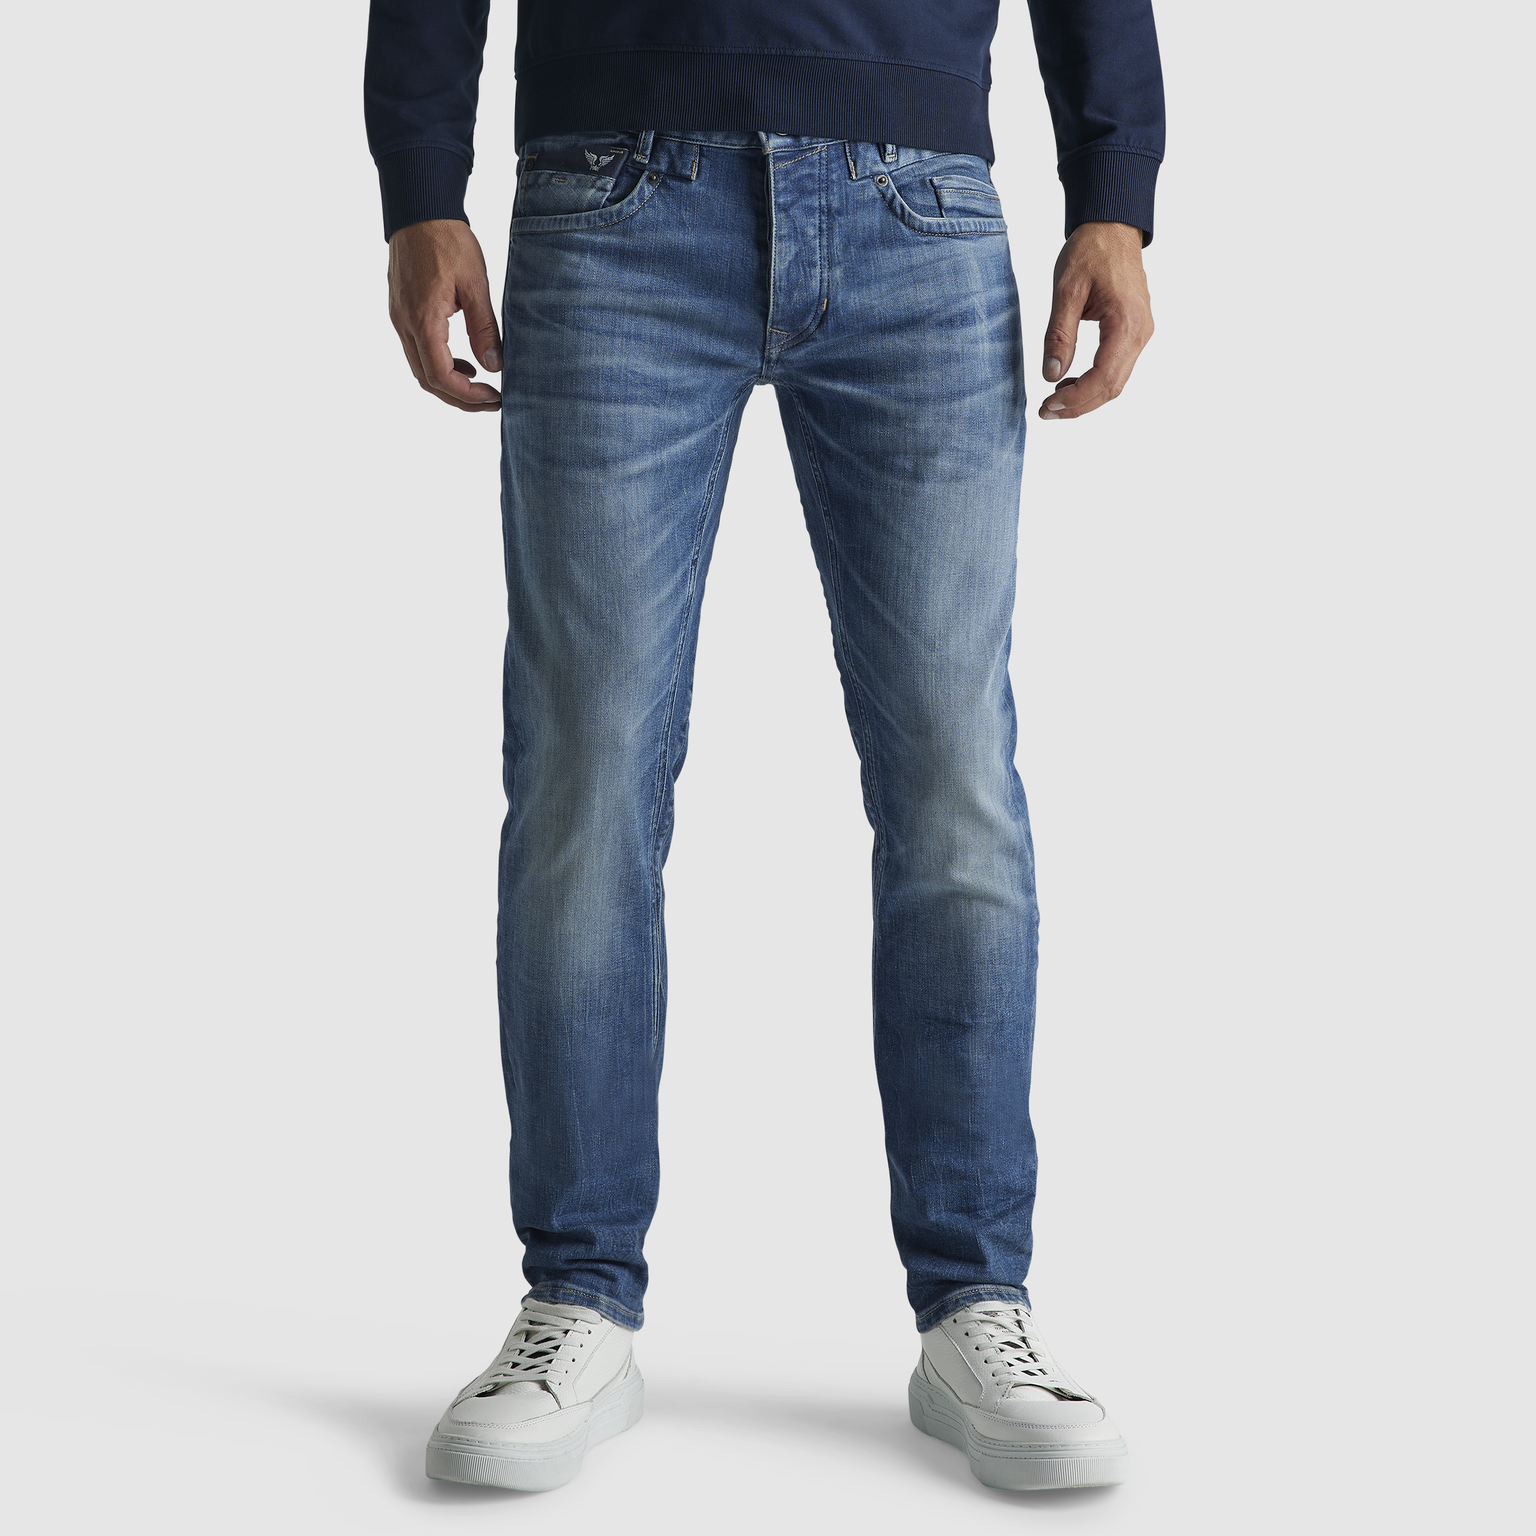 ik heb het gevonden Inwoner Imperial Gratis verzending! - PME Legend Straight Fit Commander Jeans 3.0 PTR18 -  Greenfield Fashion